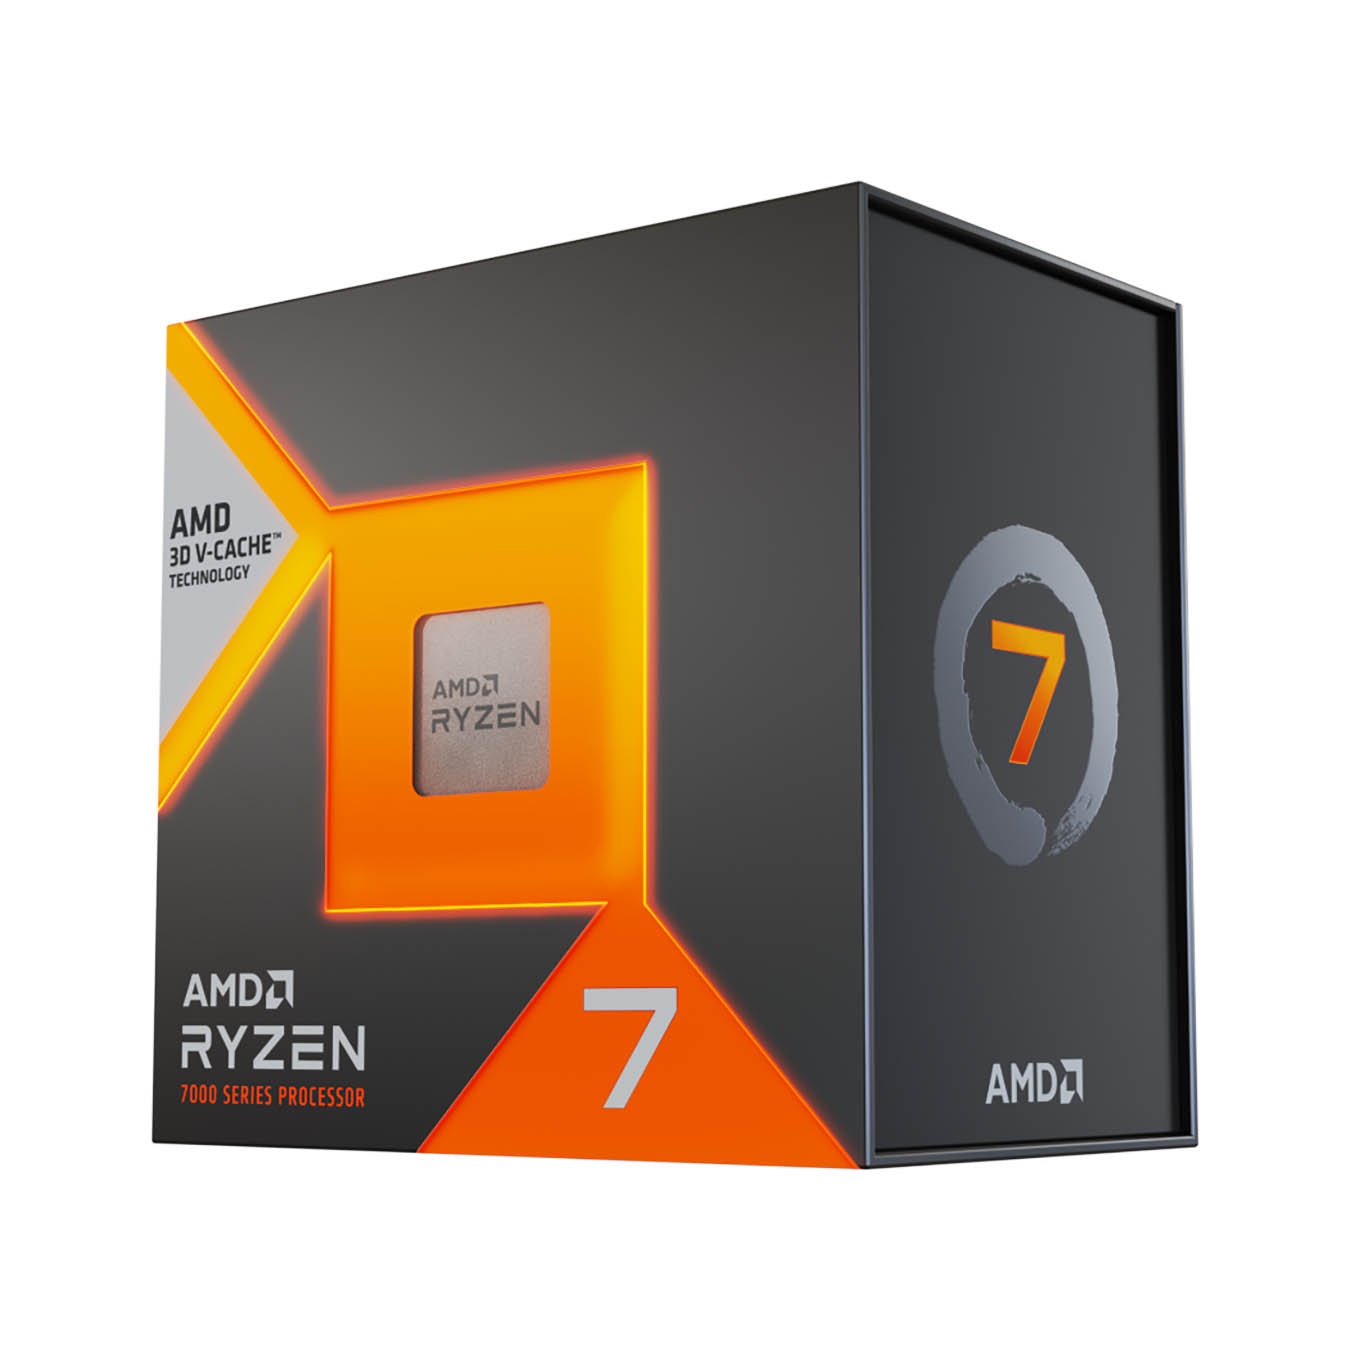 AMD Ryzen 7 7800X3D, without Cooler